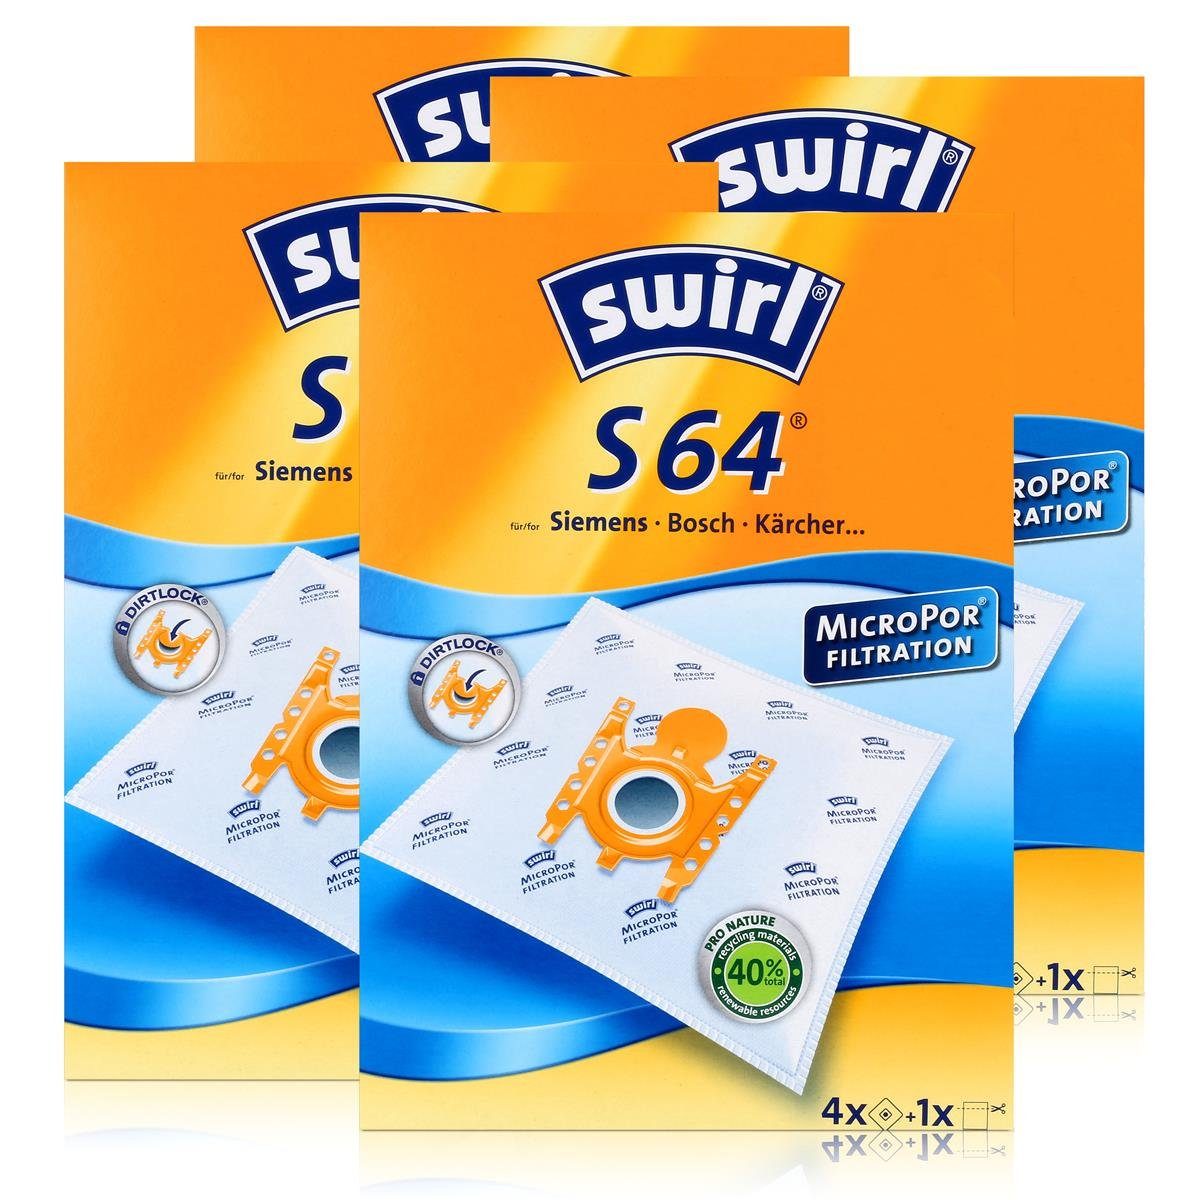 S 4 Swirl Swirl / Papierbeutel MP Staubsaugerbeutel Micropor 66 S 64 Staubsaugerbeutel x